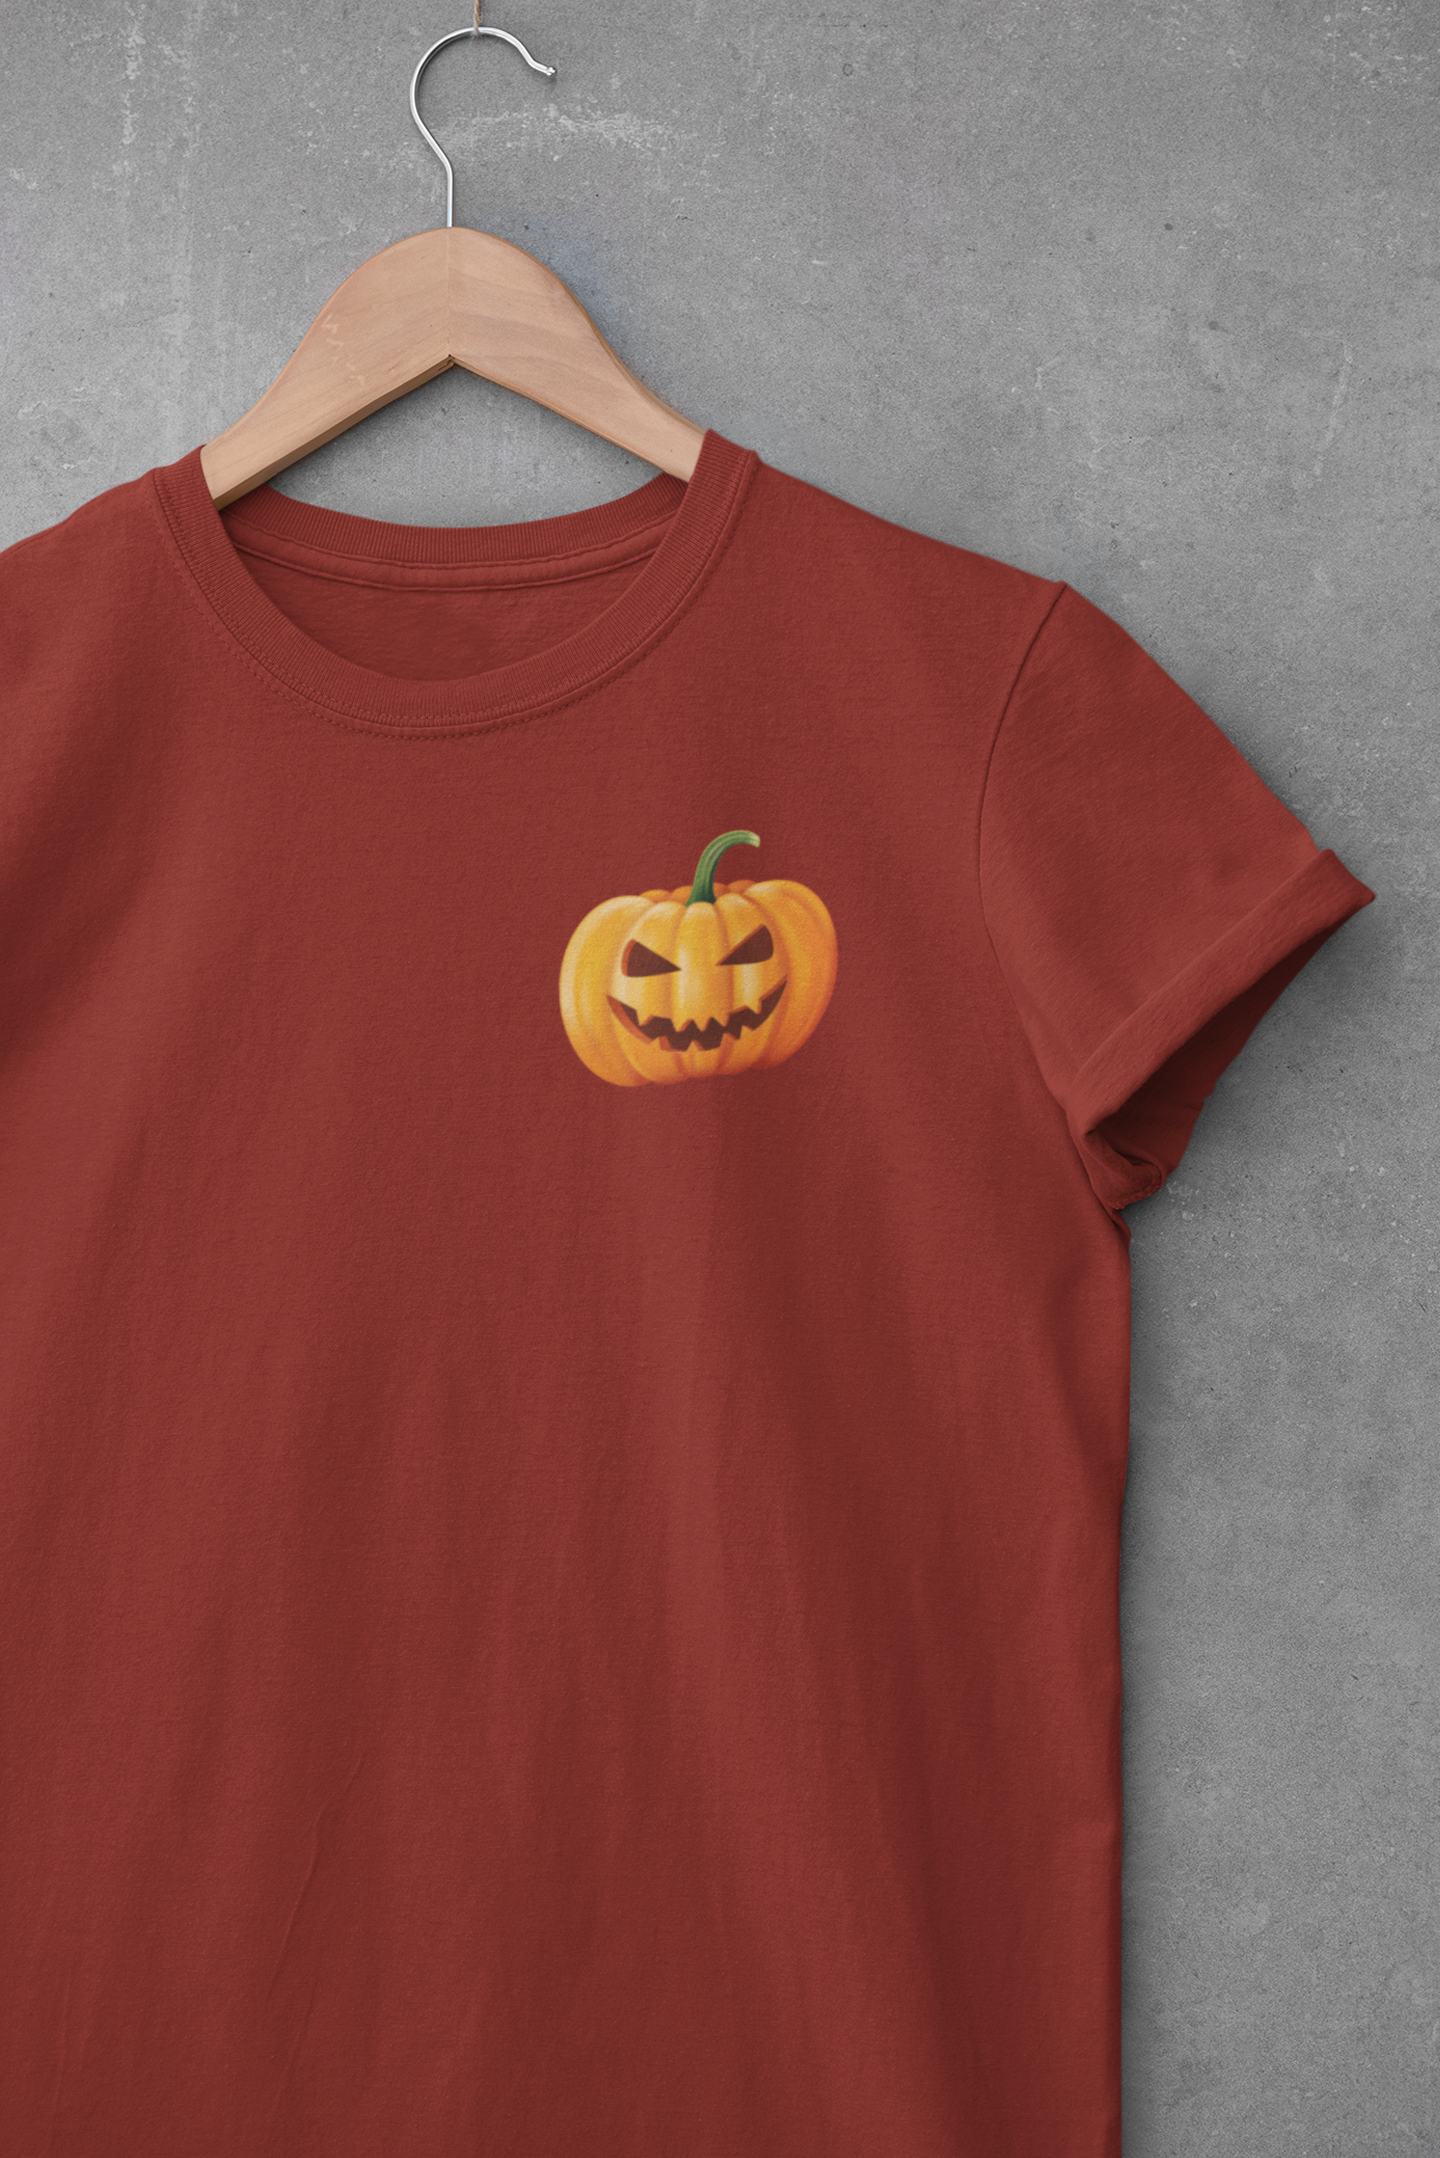 Pocket Size Pumpkin DTF Transfer for T-shirts, Hoodies, heat Transfer, Ready To Press Heat Press Transfers DTF07